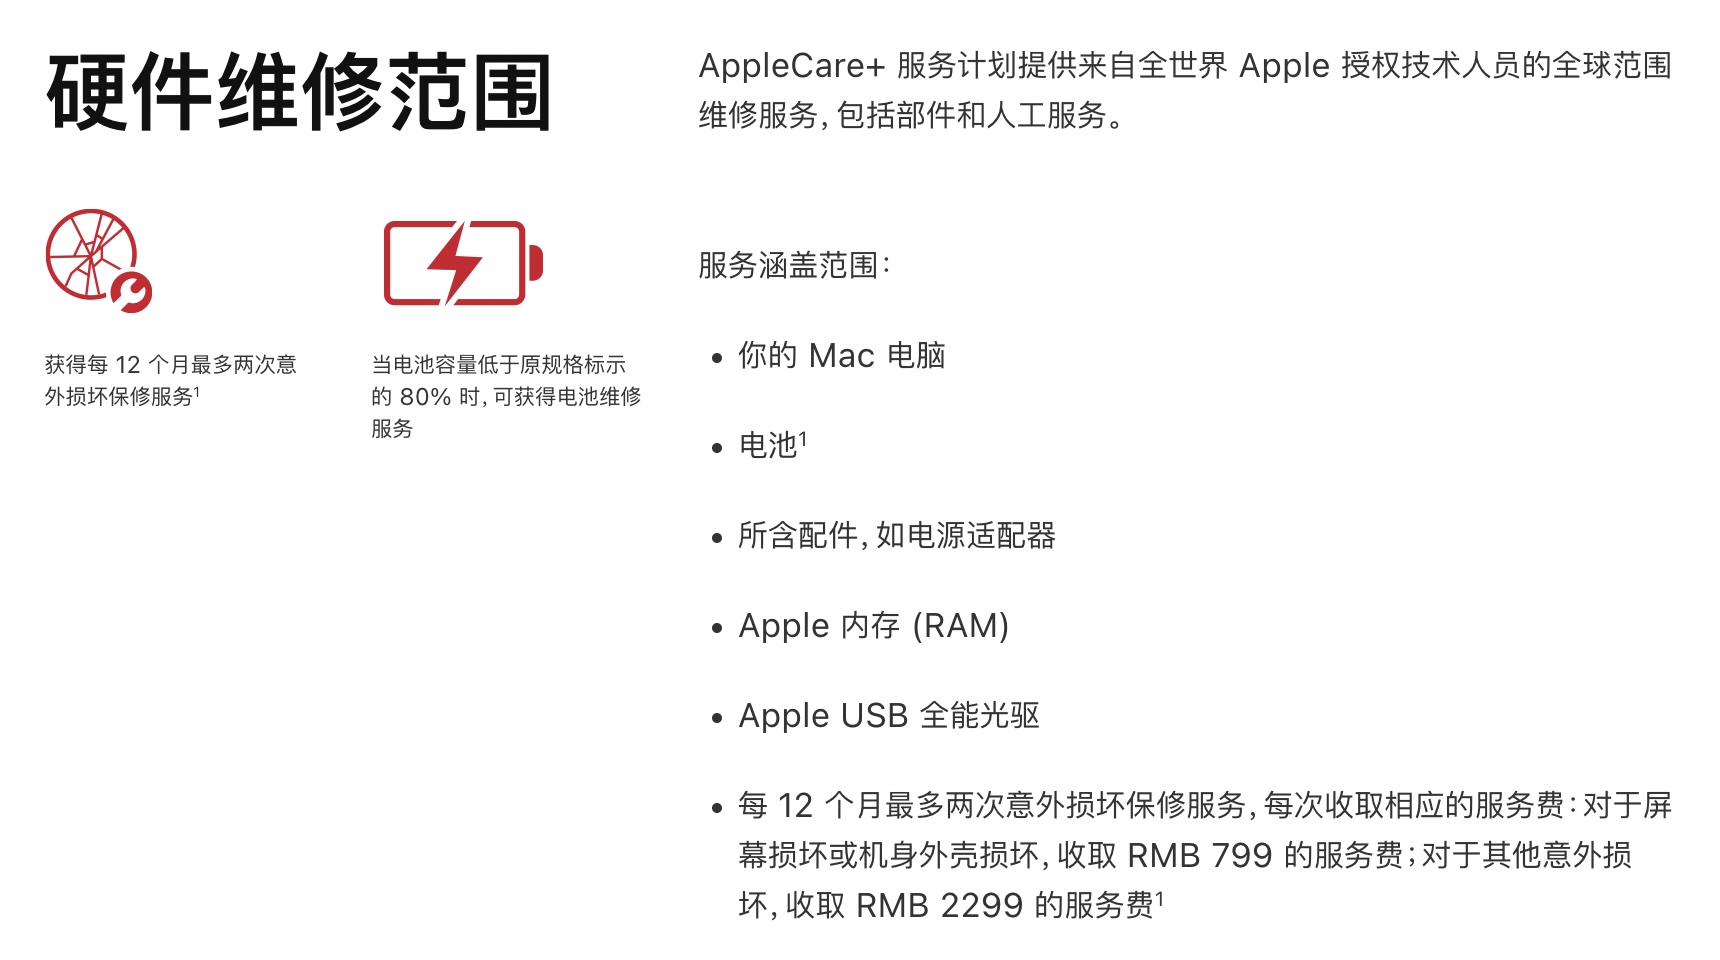 AppleCare+ 产品说明